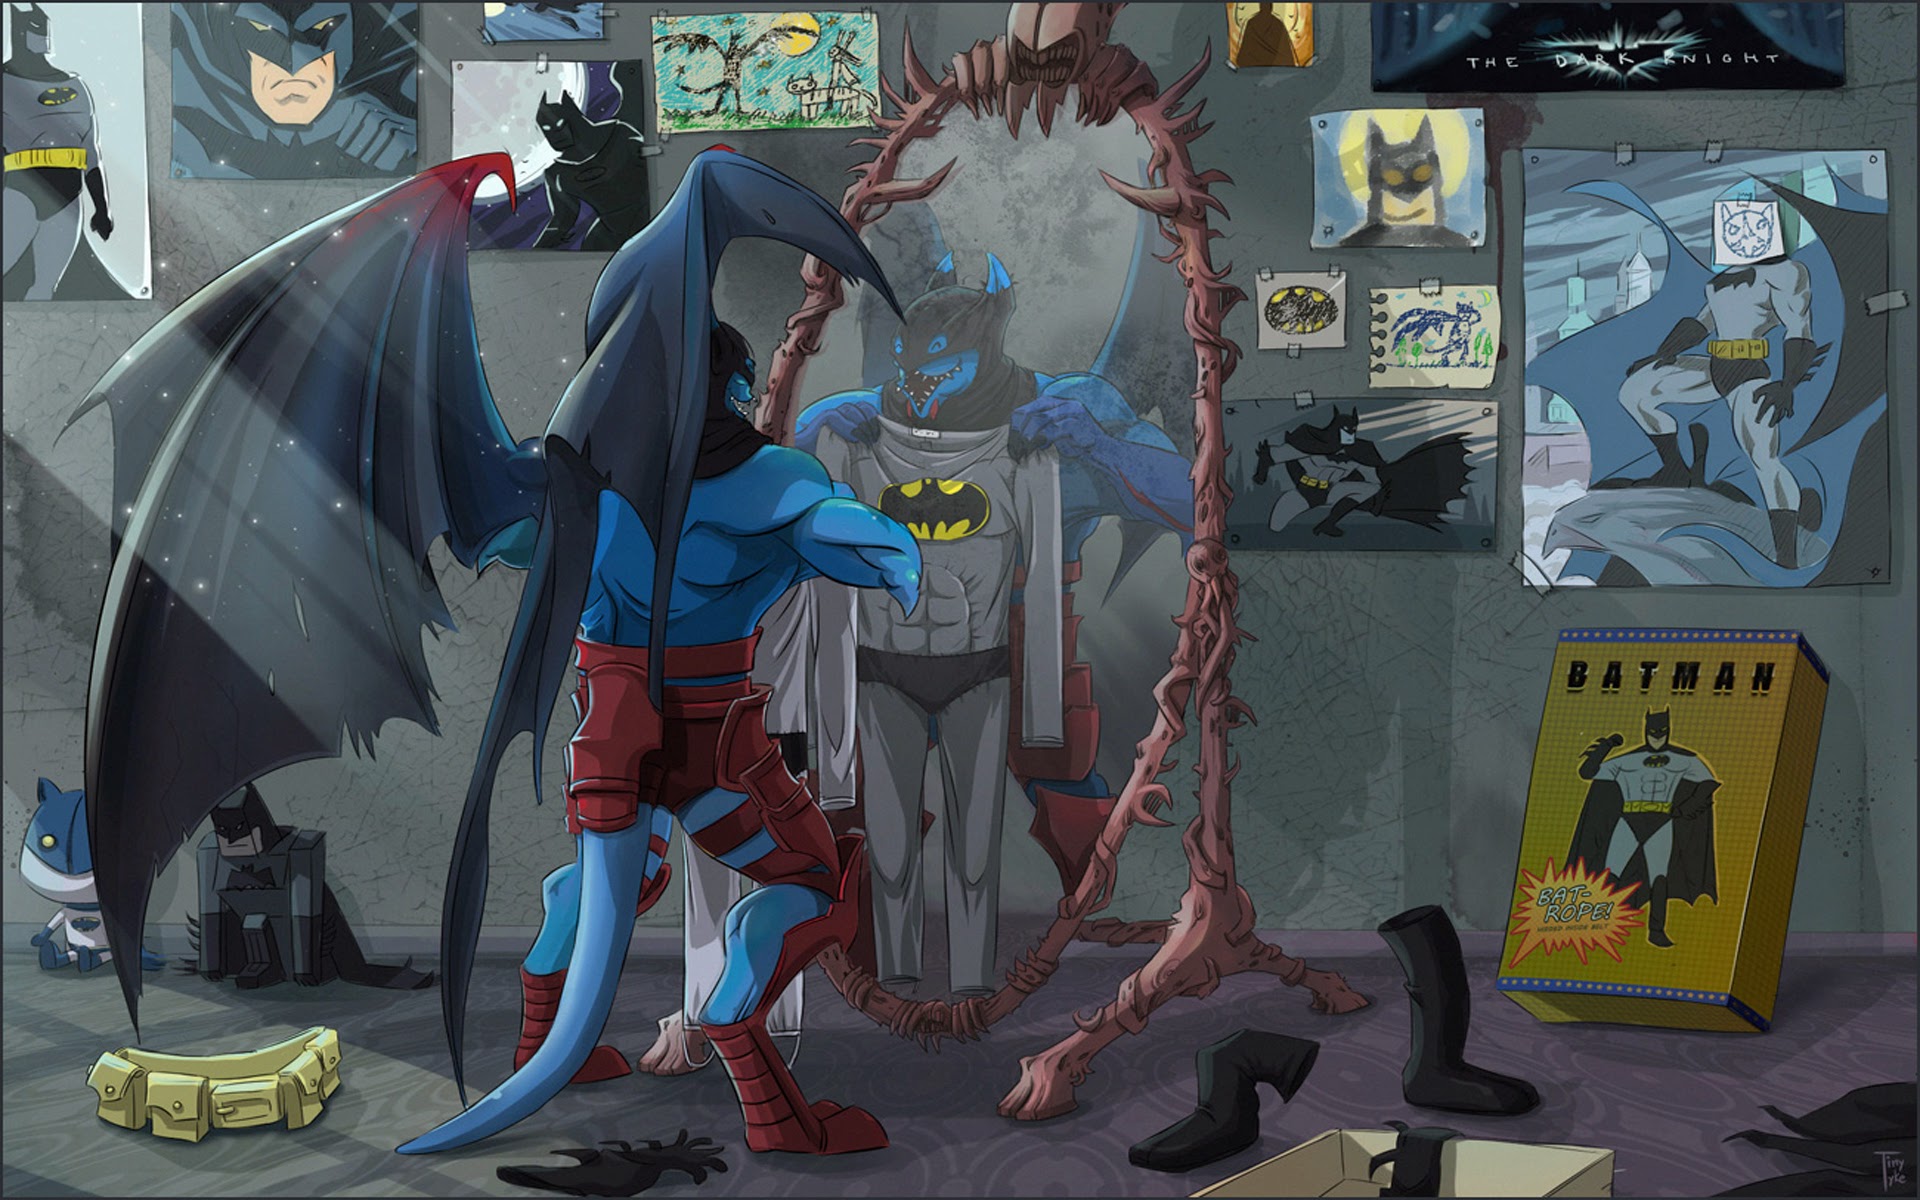  batman costume night stalker dota 2 hero hd wallpaper 1920x1080 1j